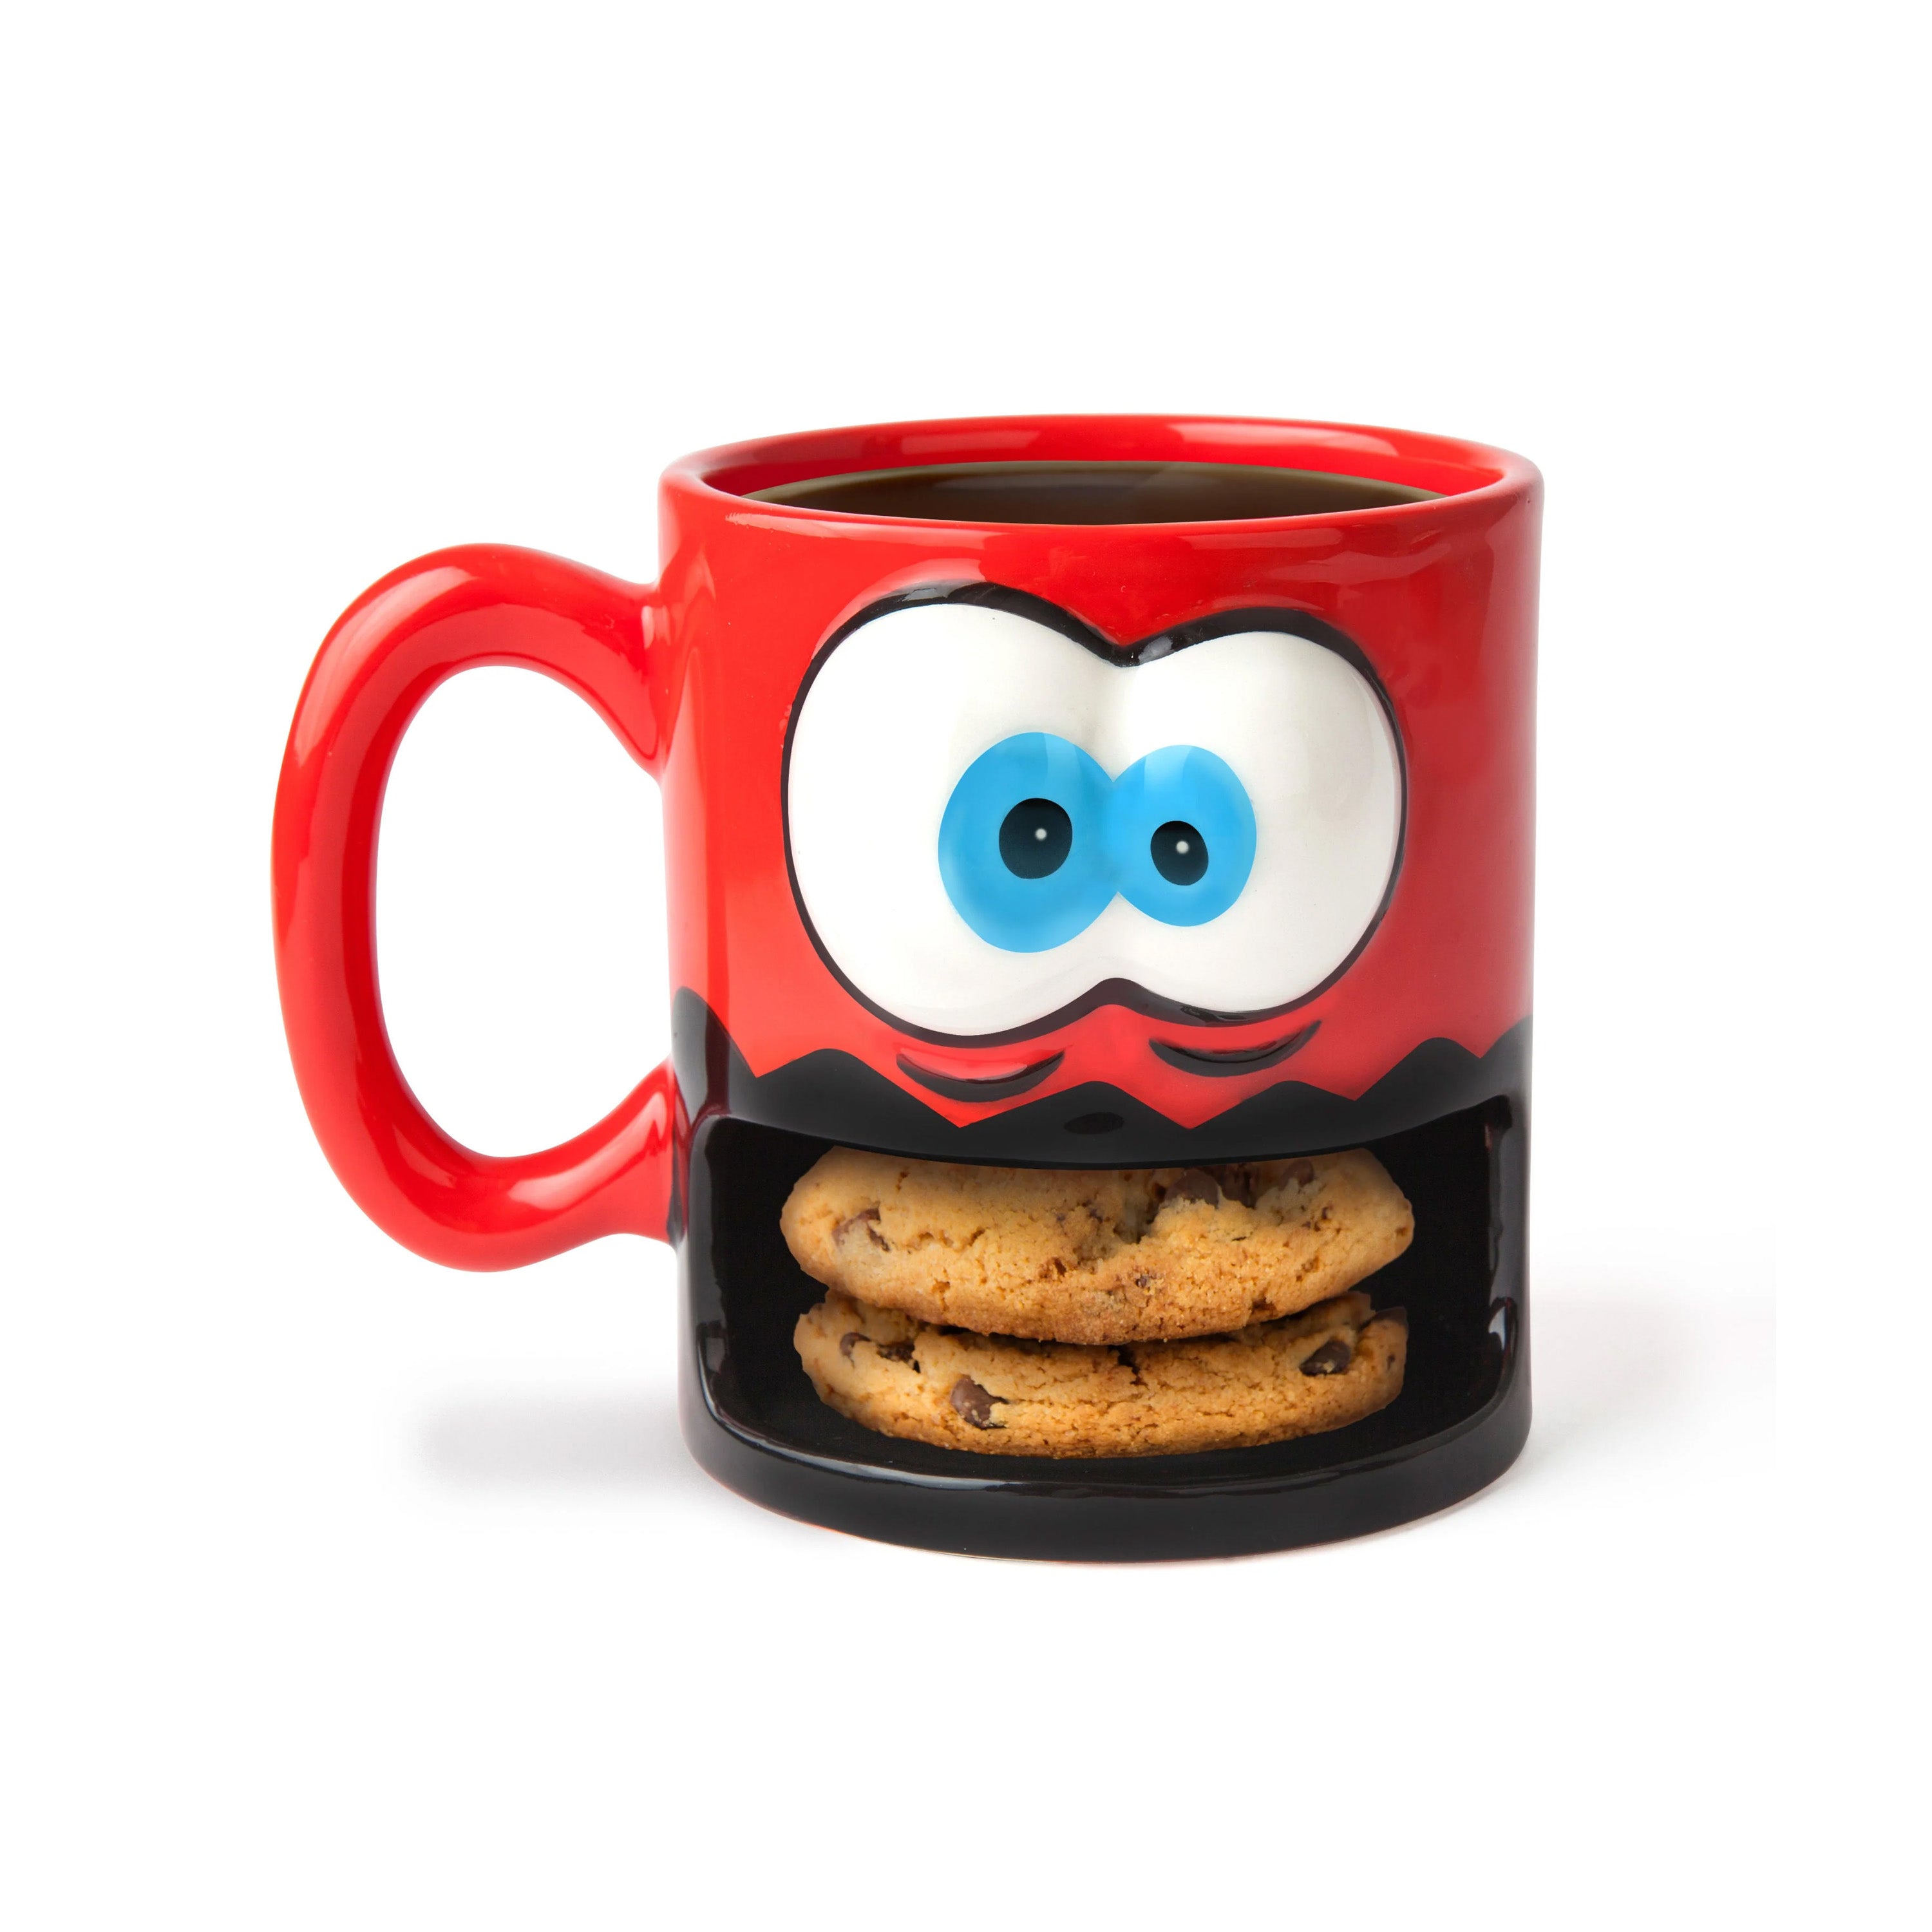 The Crazy for Cookies Coffee Mug